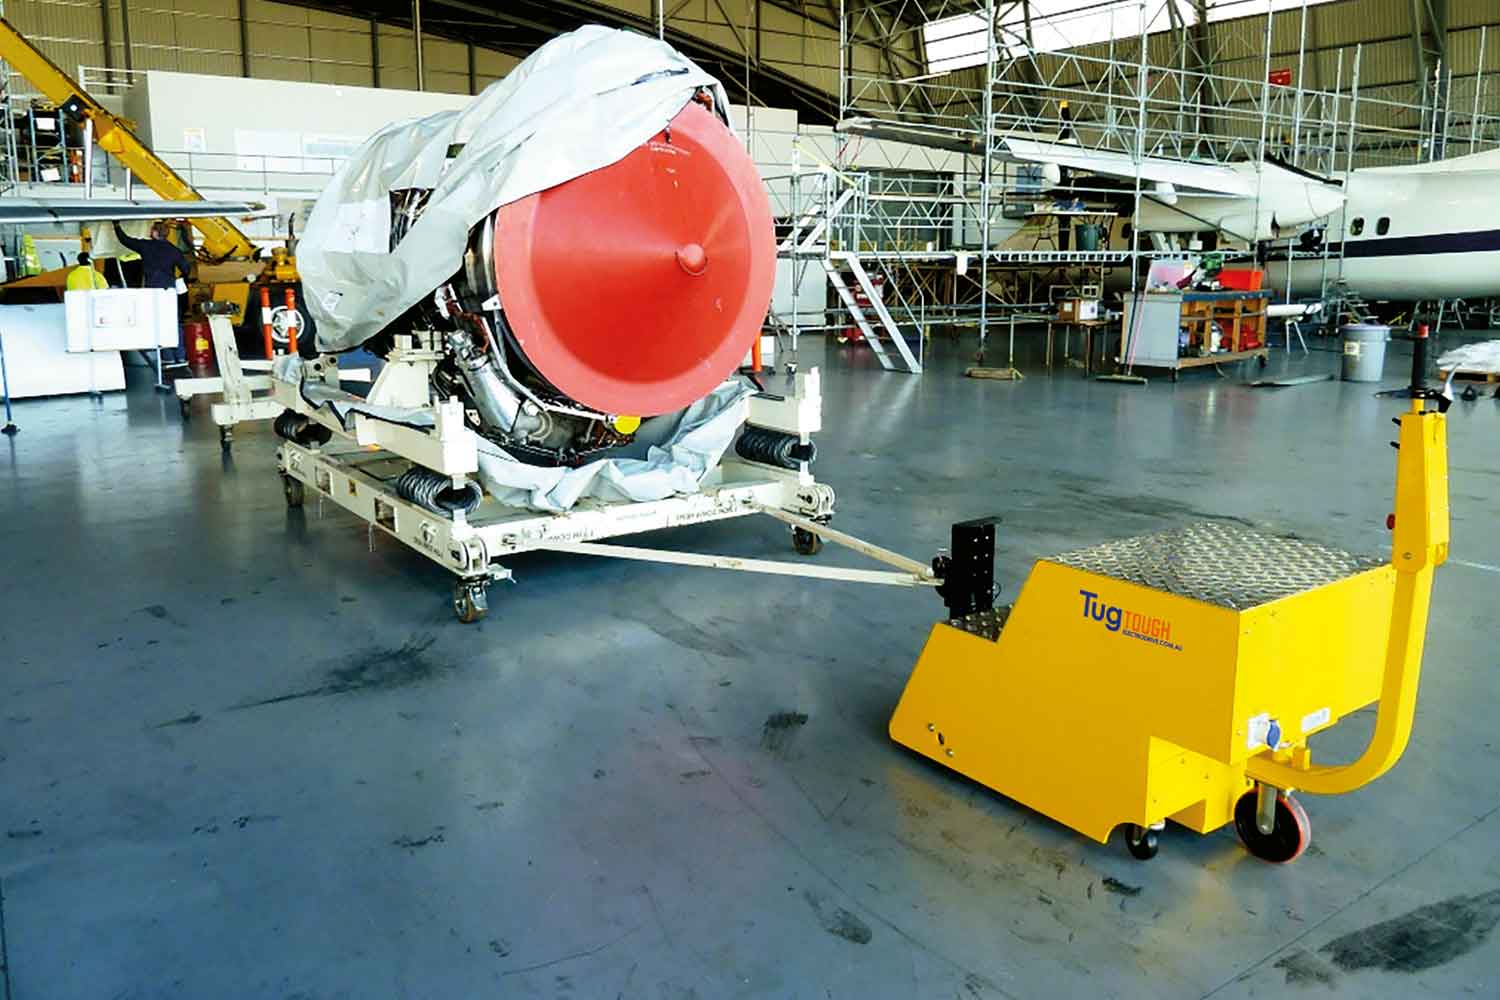 A Tug Tough towing aircraft machinery